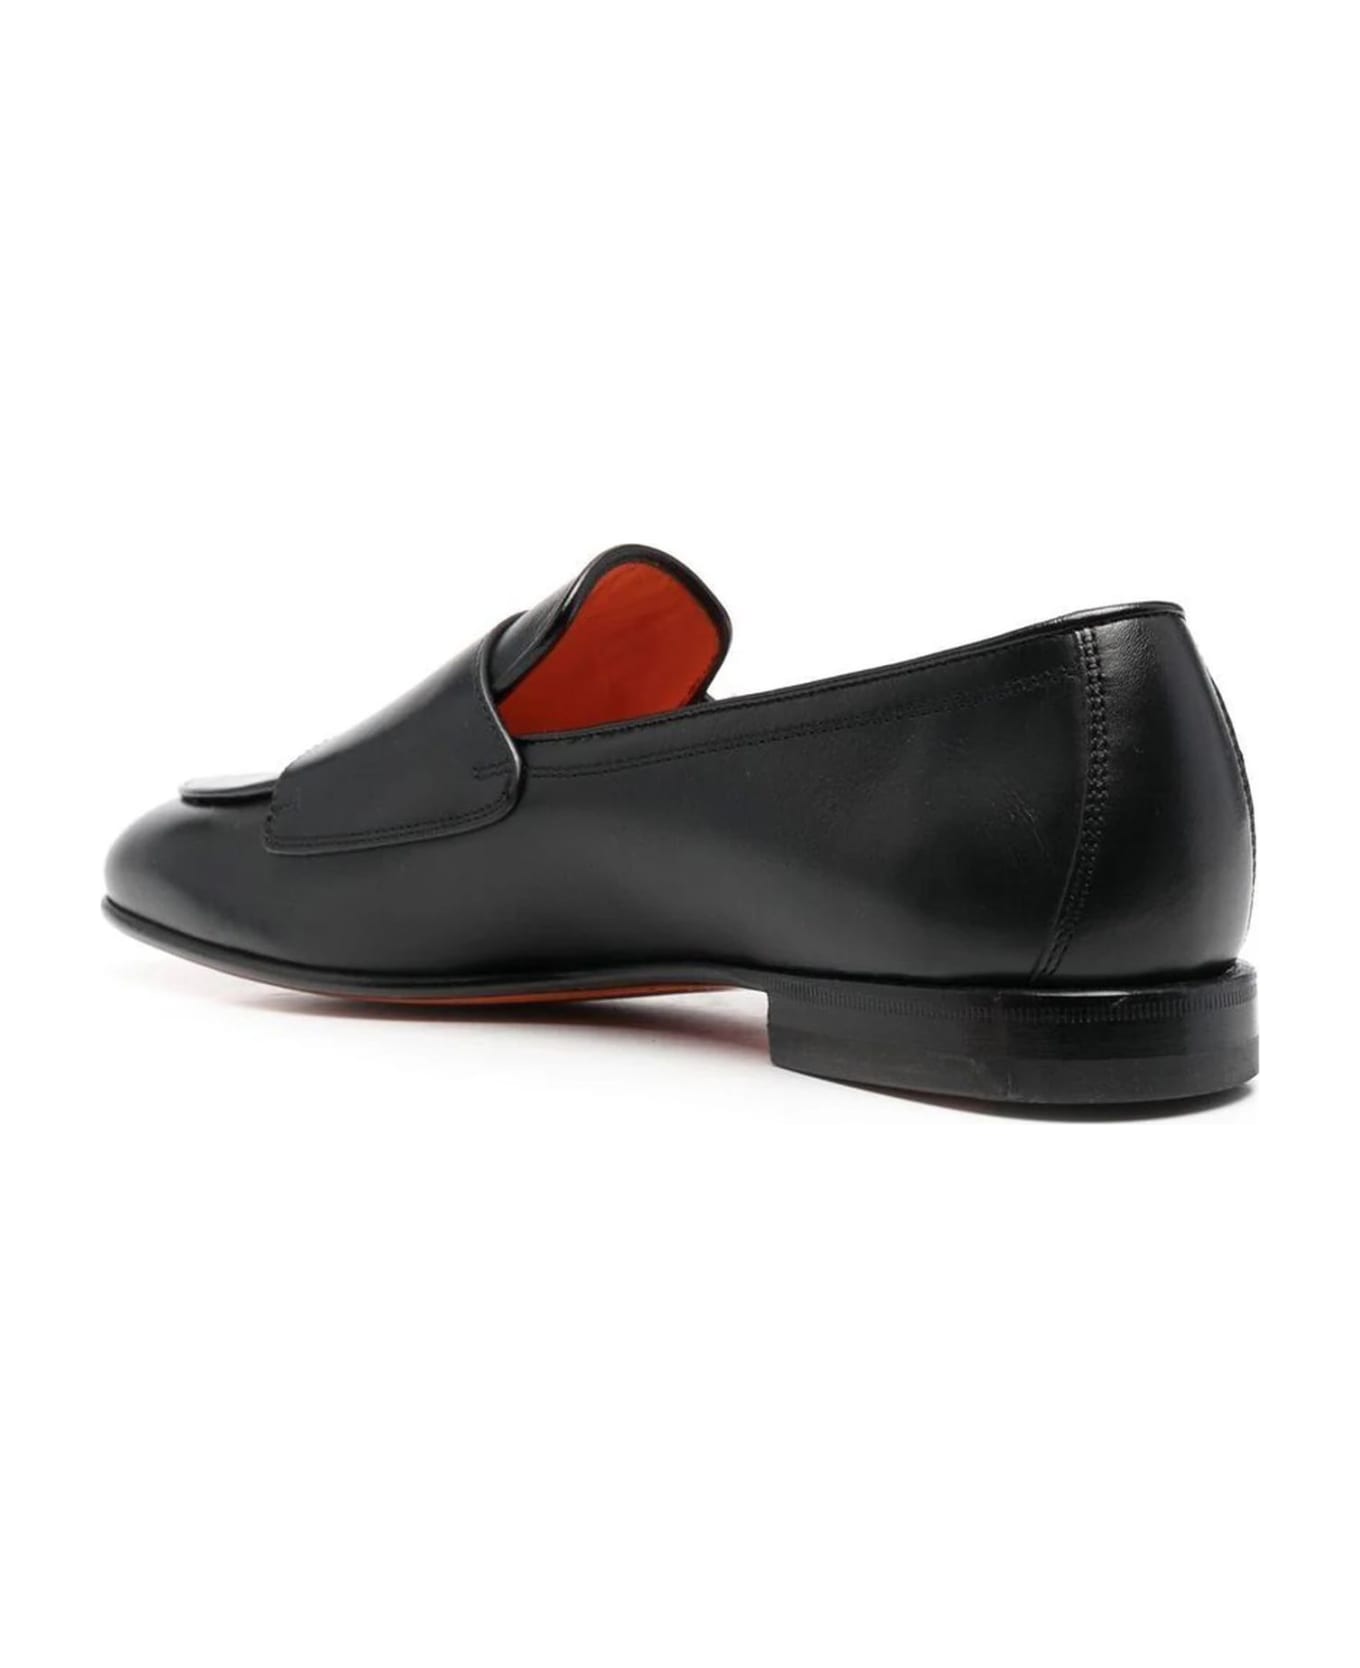 Santoni Black Leather Monk Shoes - Black